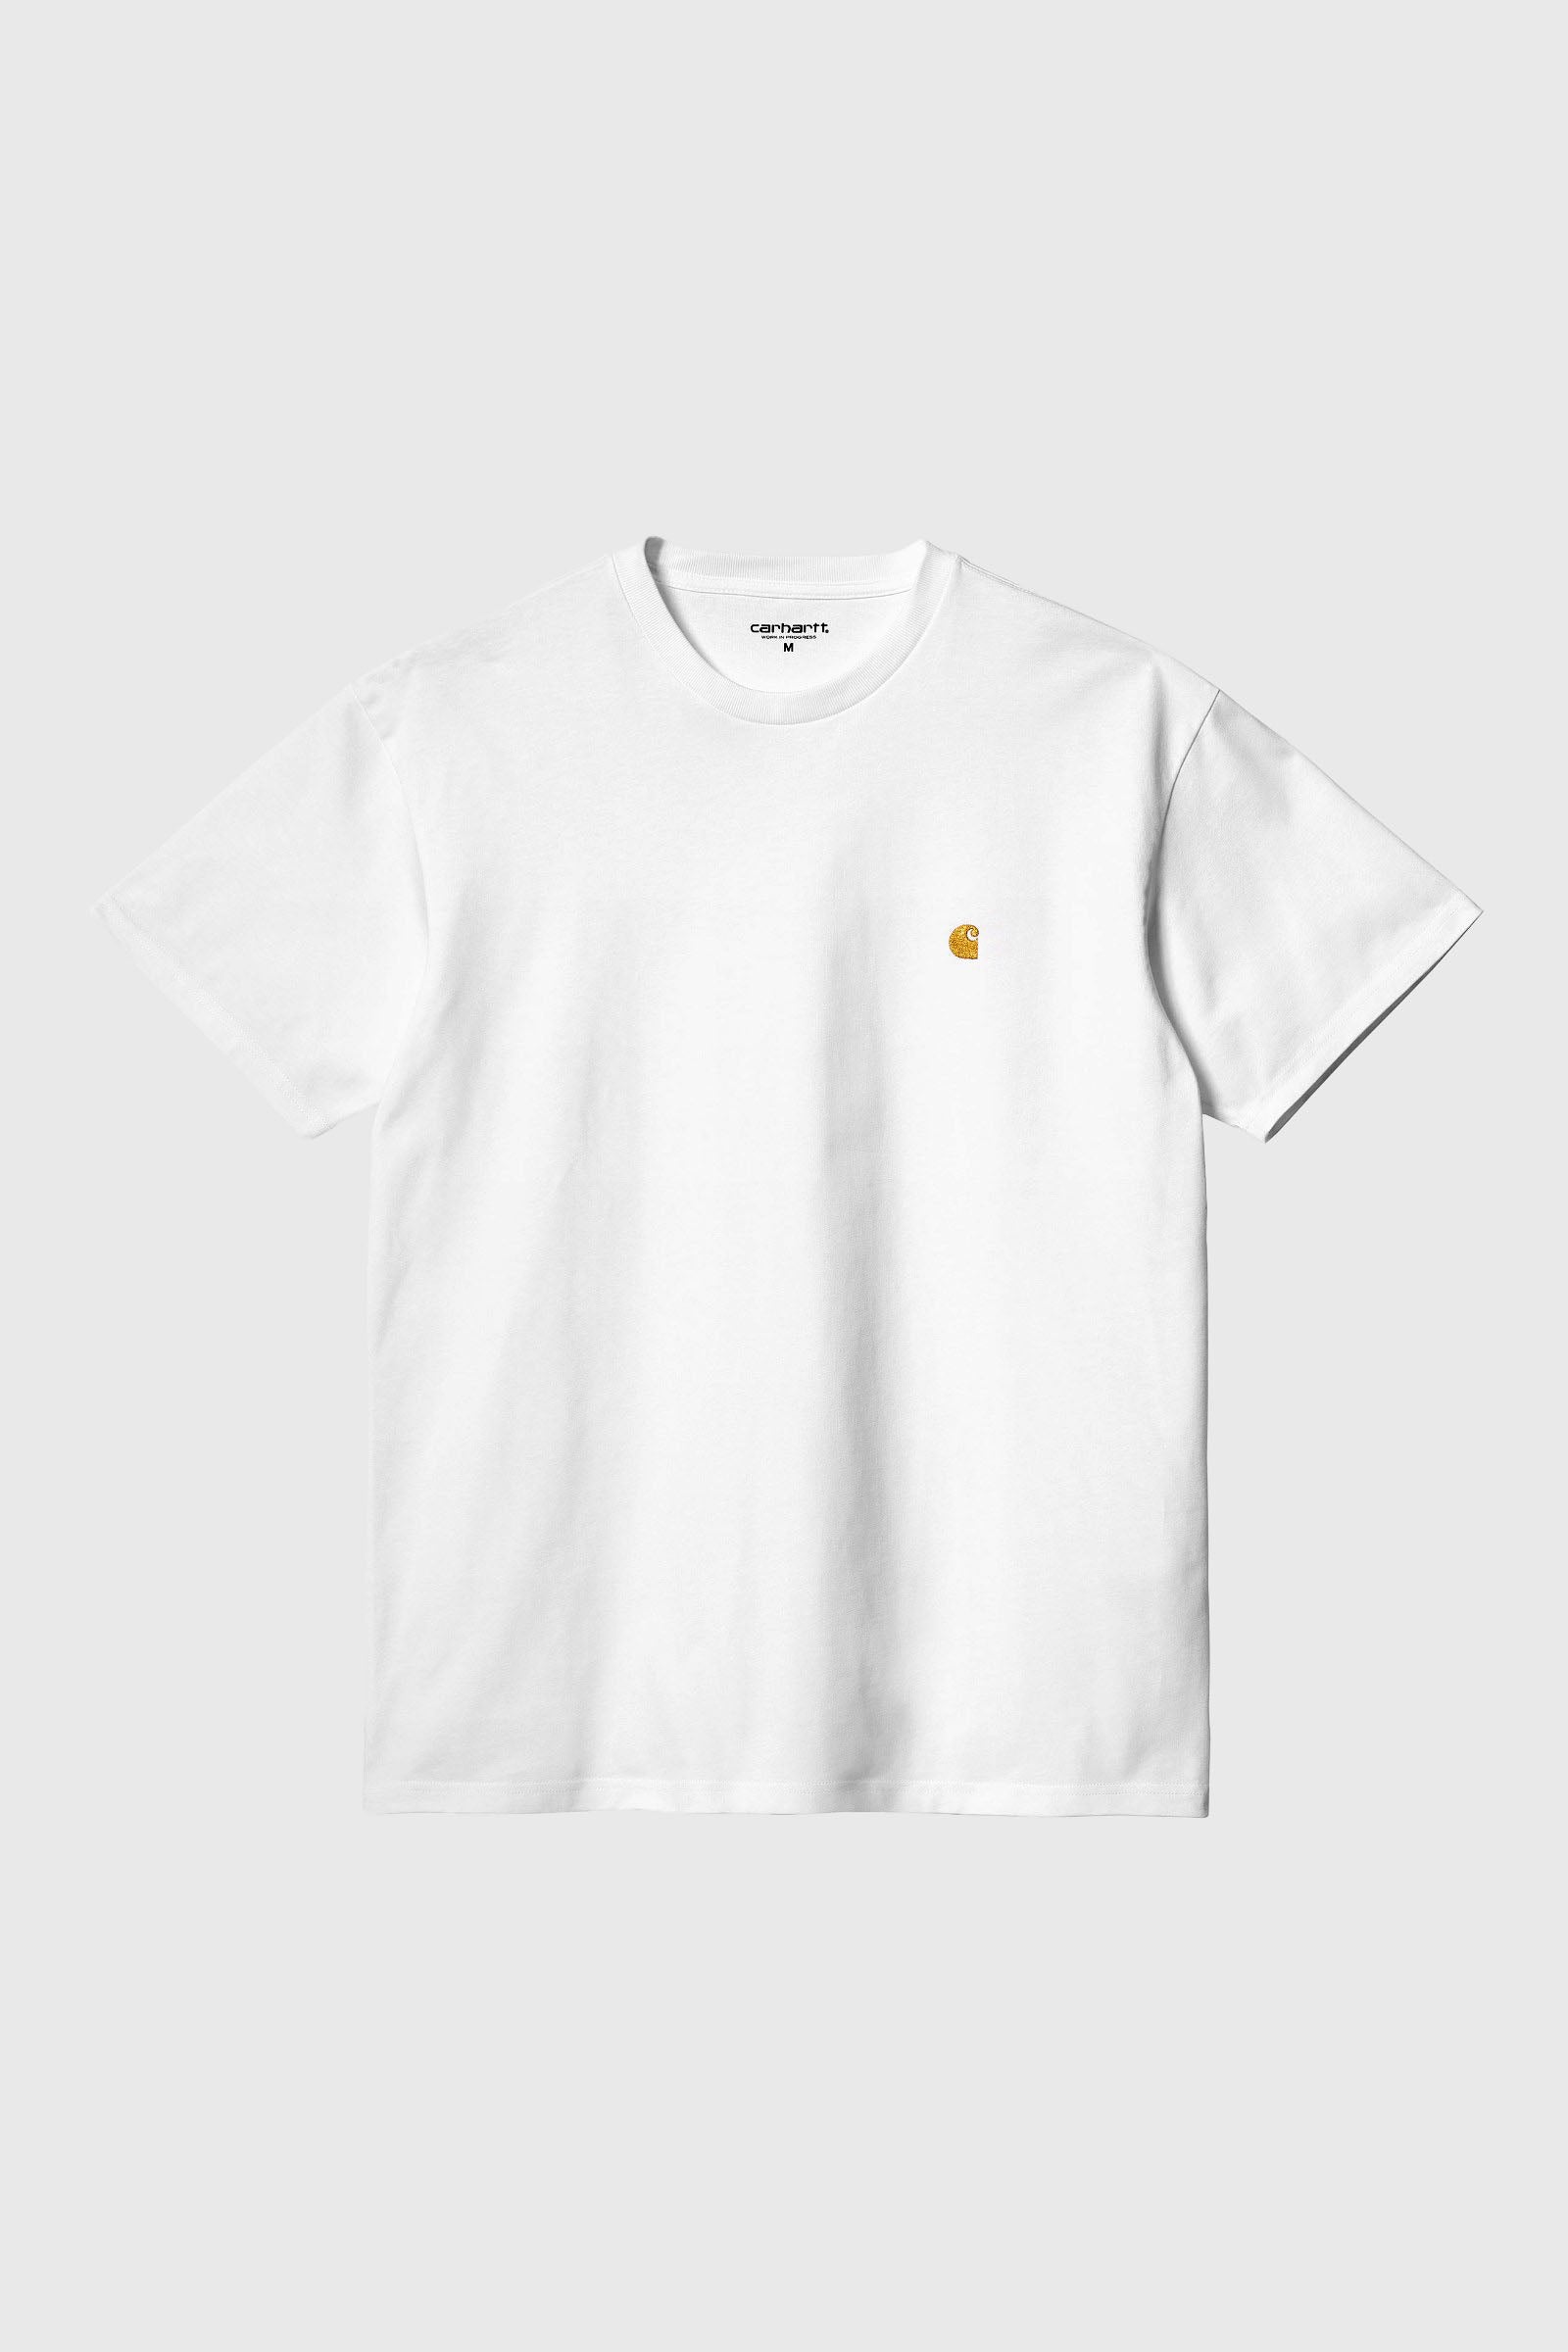 Carhartt Wip T-shirt S/s Chase Bianco - 6